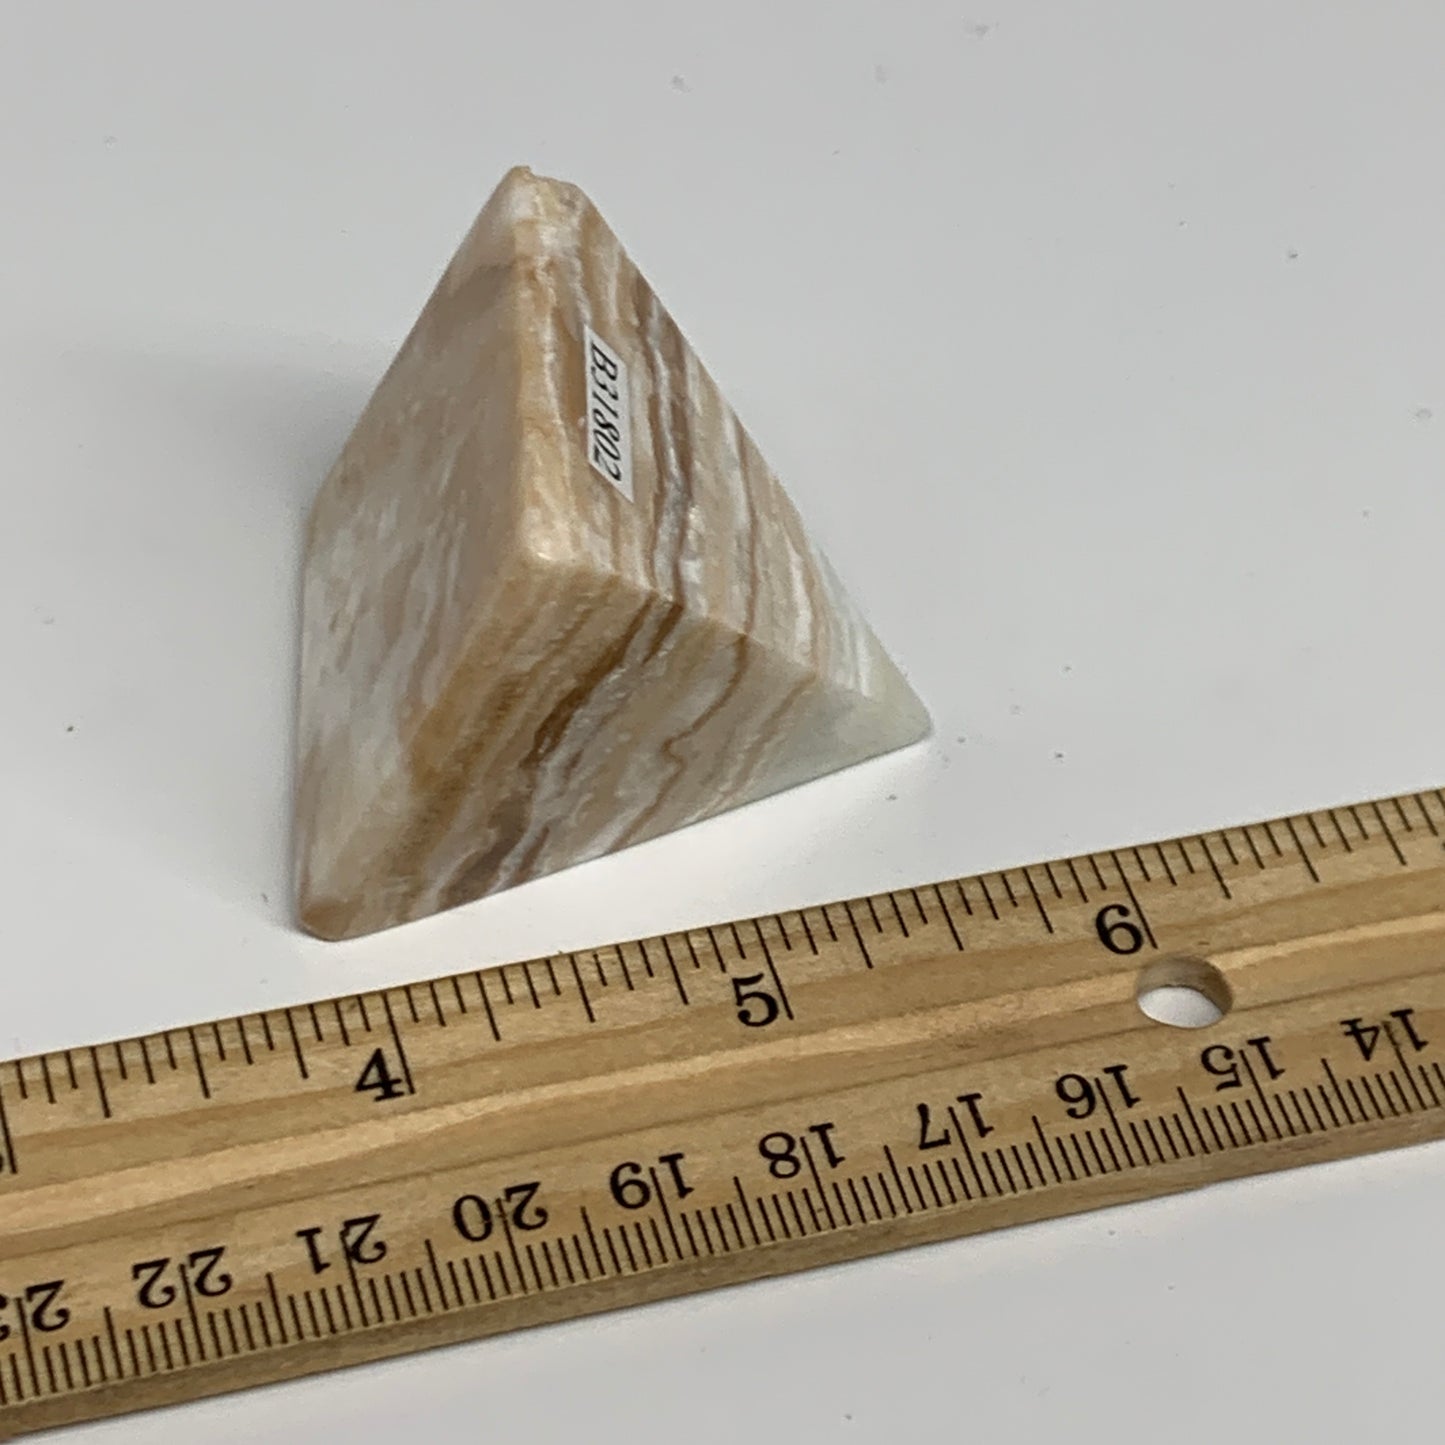 71.9g, 1.6"x1.6"x1.5", Caribbean Calcite Pyramid Gemstone, Crystal, B31802